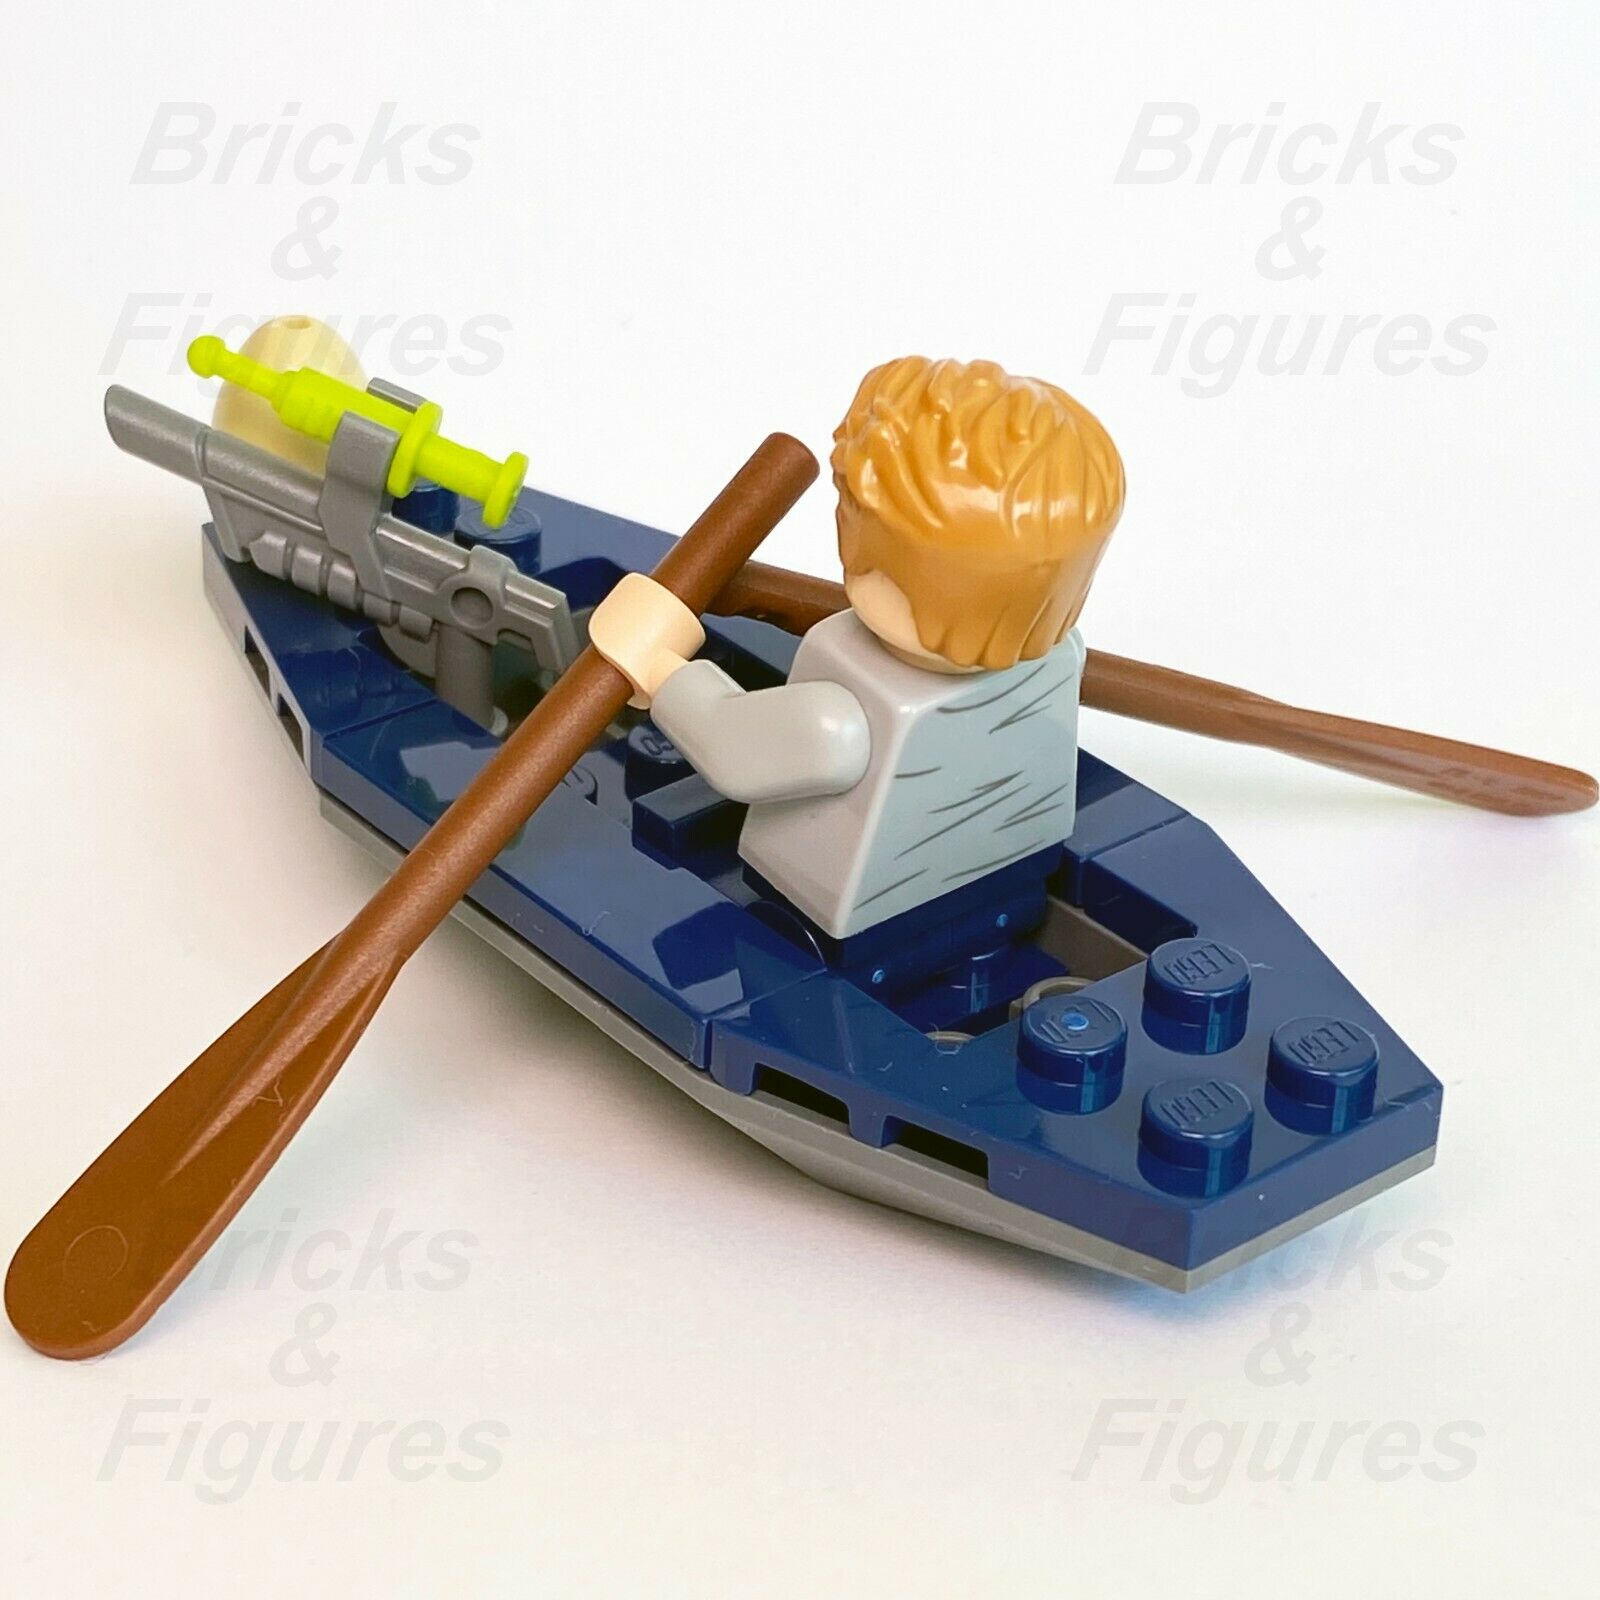 New Jurassic World LEGO Owen Grady with Kayak Foil Pack Set Minifigure  122007